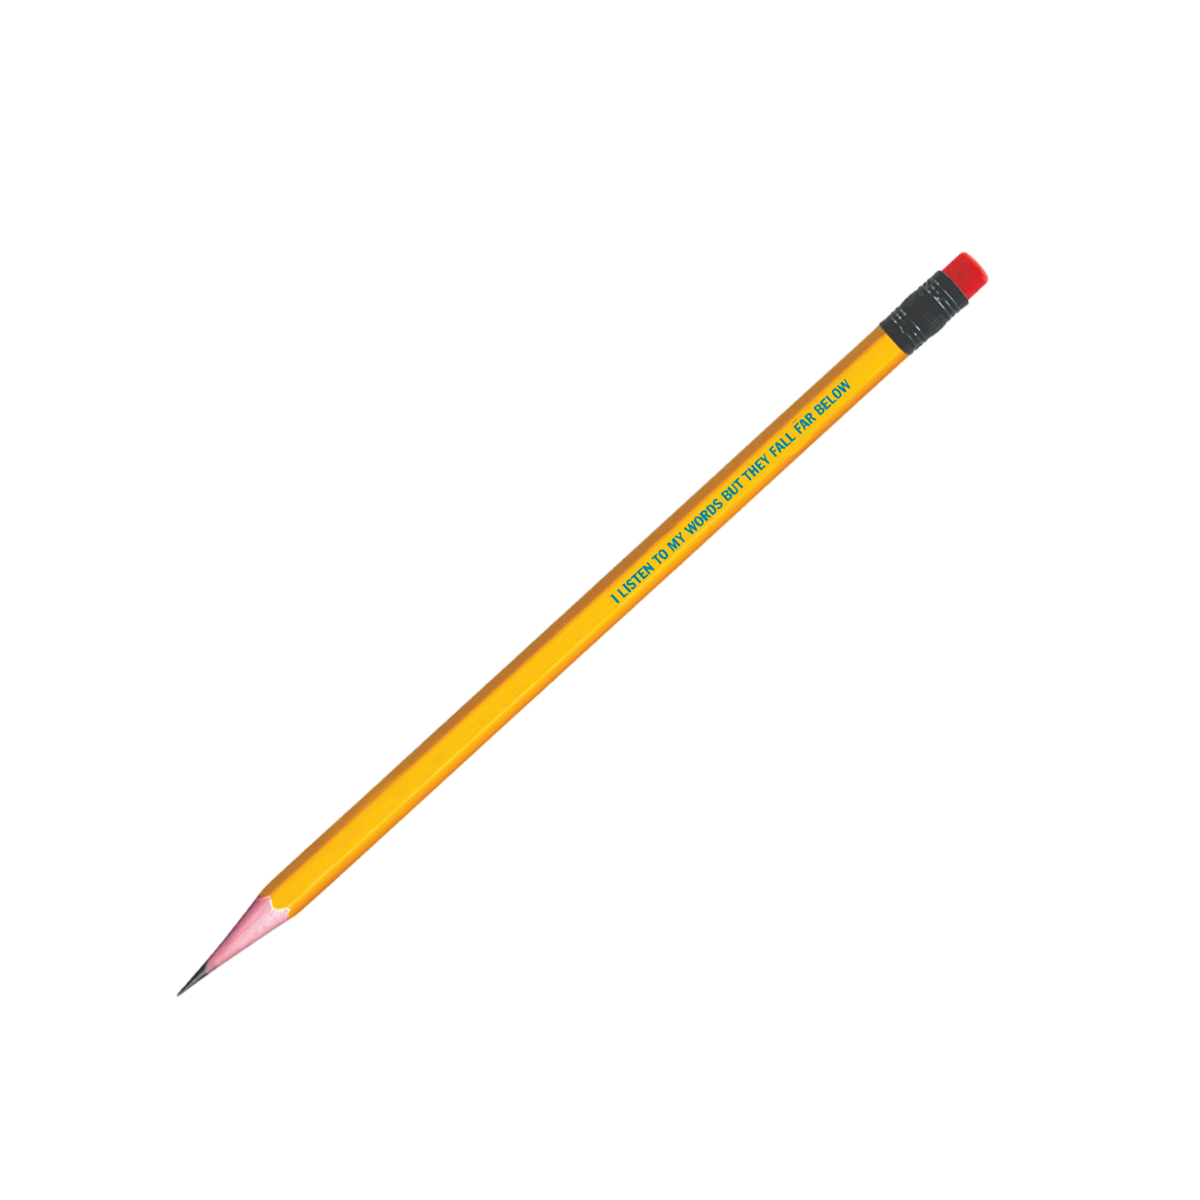 Firecat Pencil and Notebook